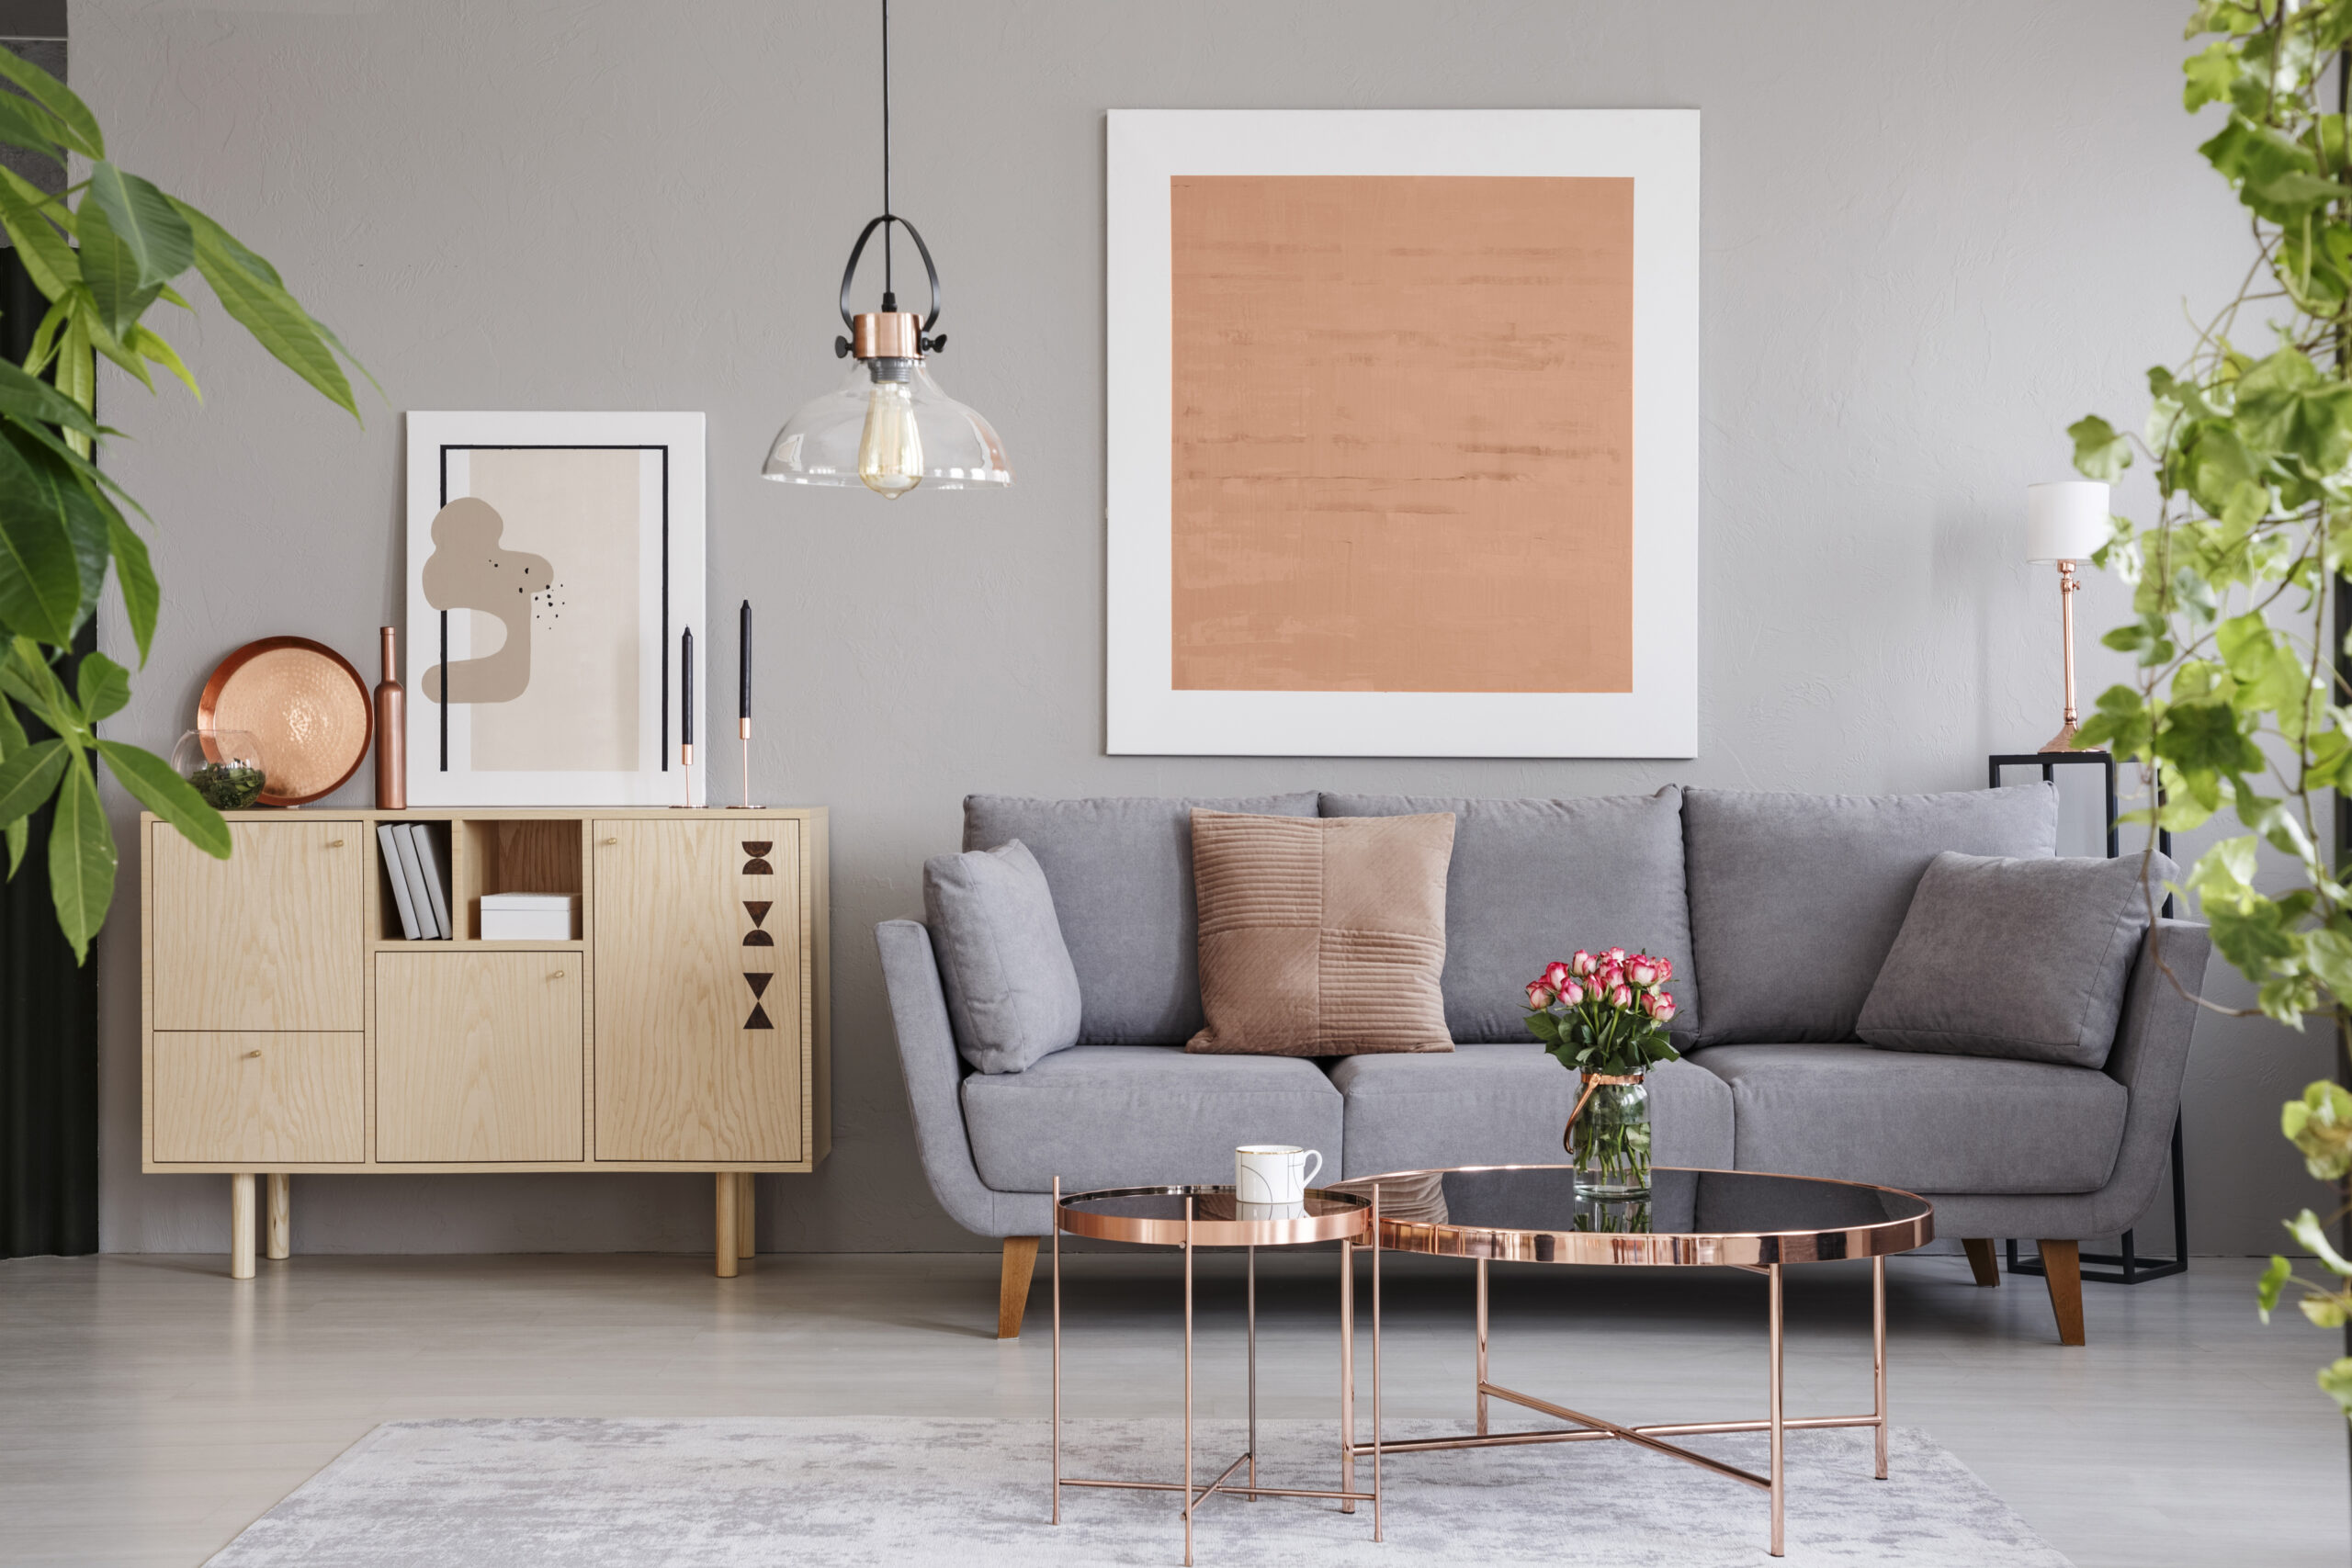 Apartment Friendly Decorating: 15 Stylish Temporary Decor Ideas